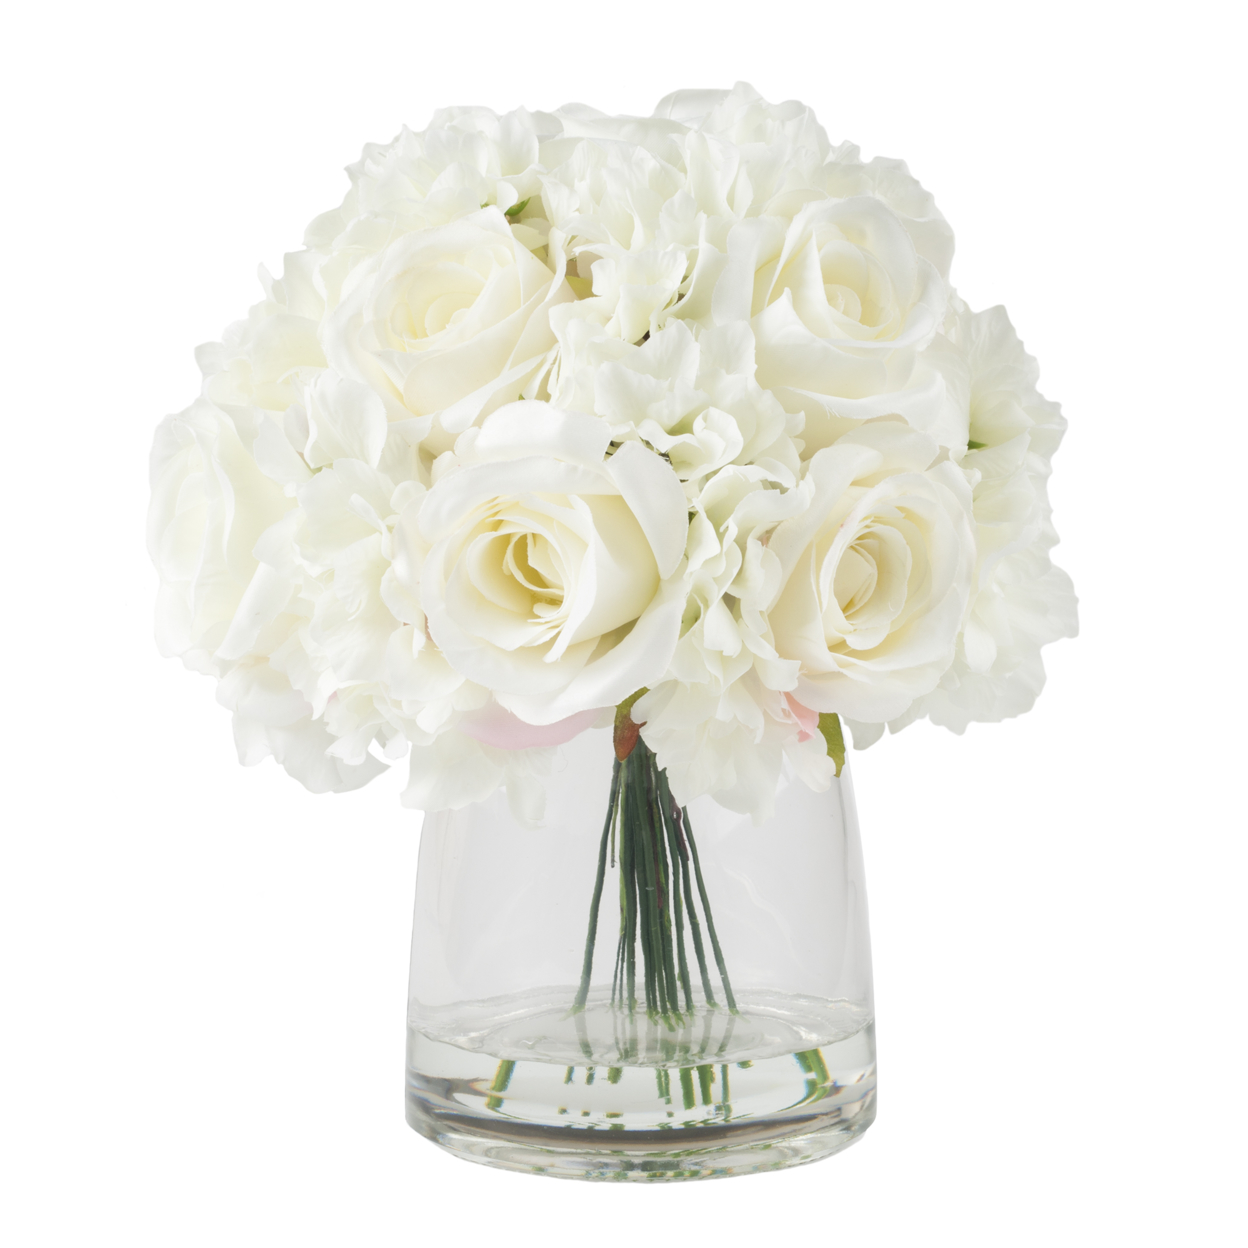 Pure Garden Hydrangea And Rose Floral Arrangement With Vase - Cream